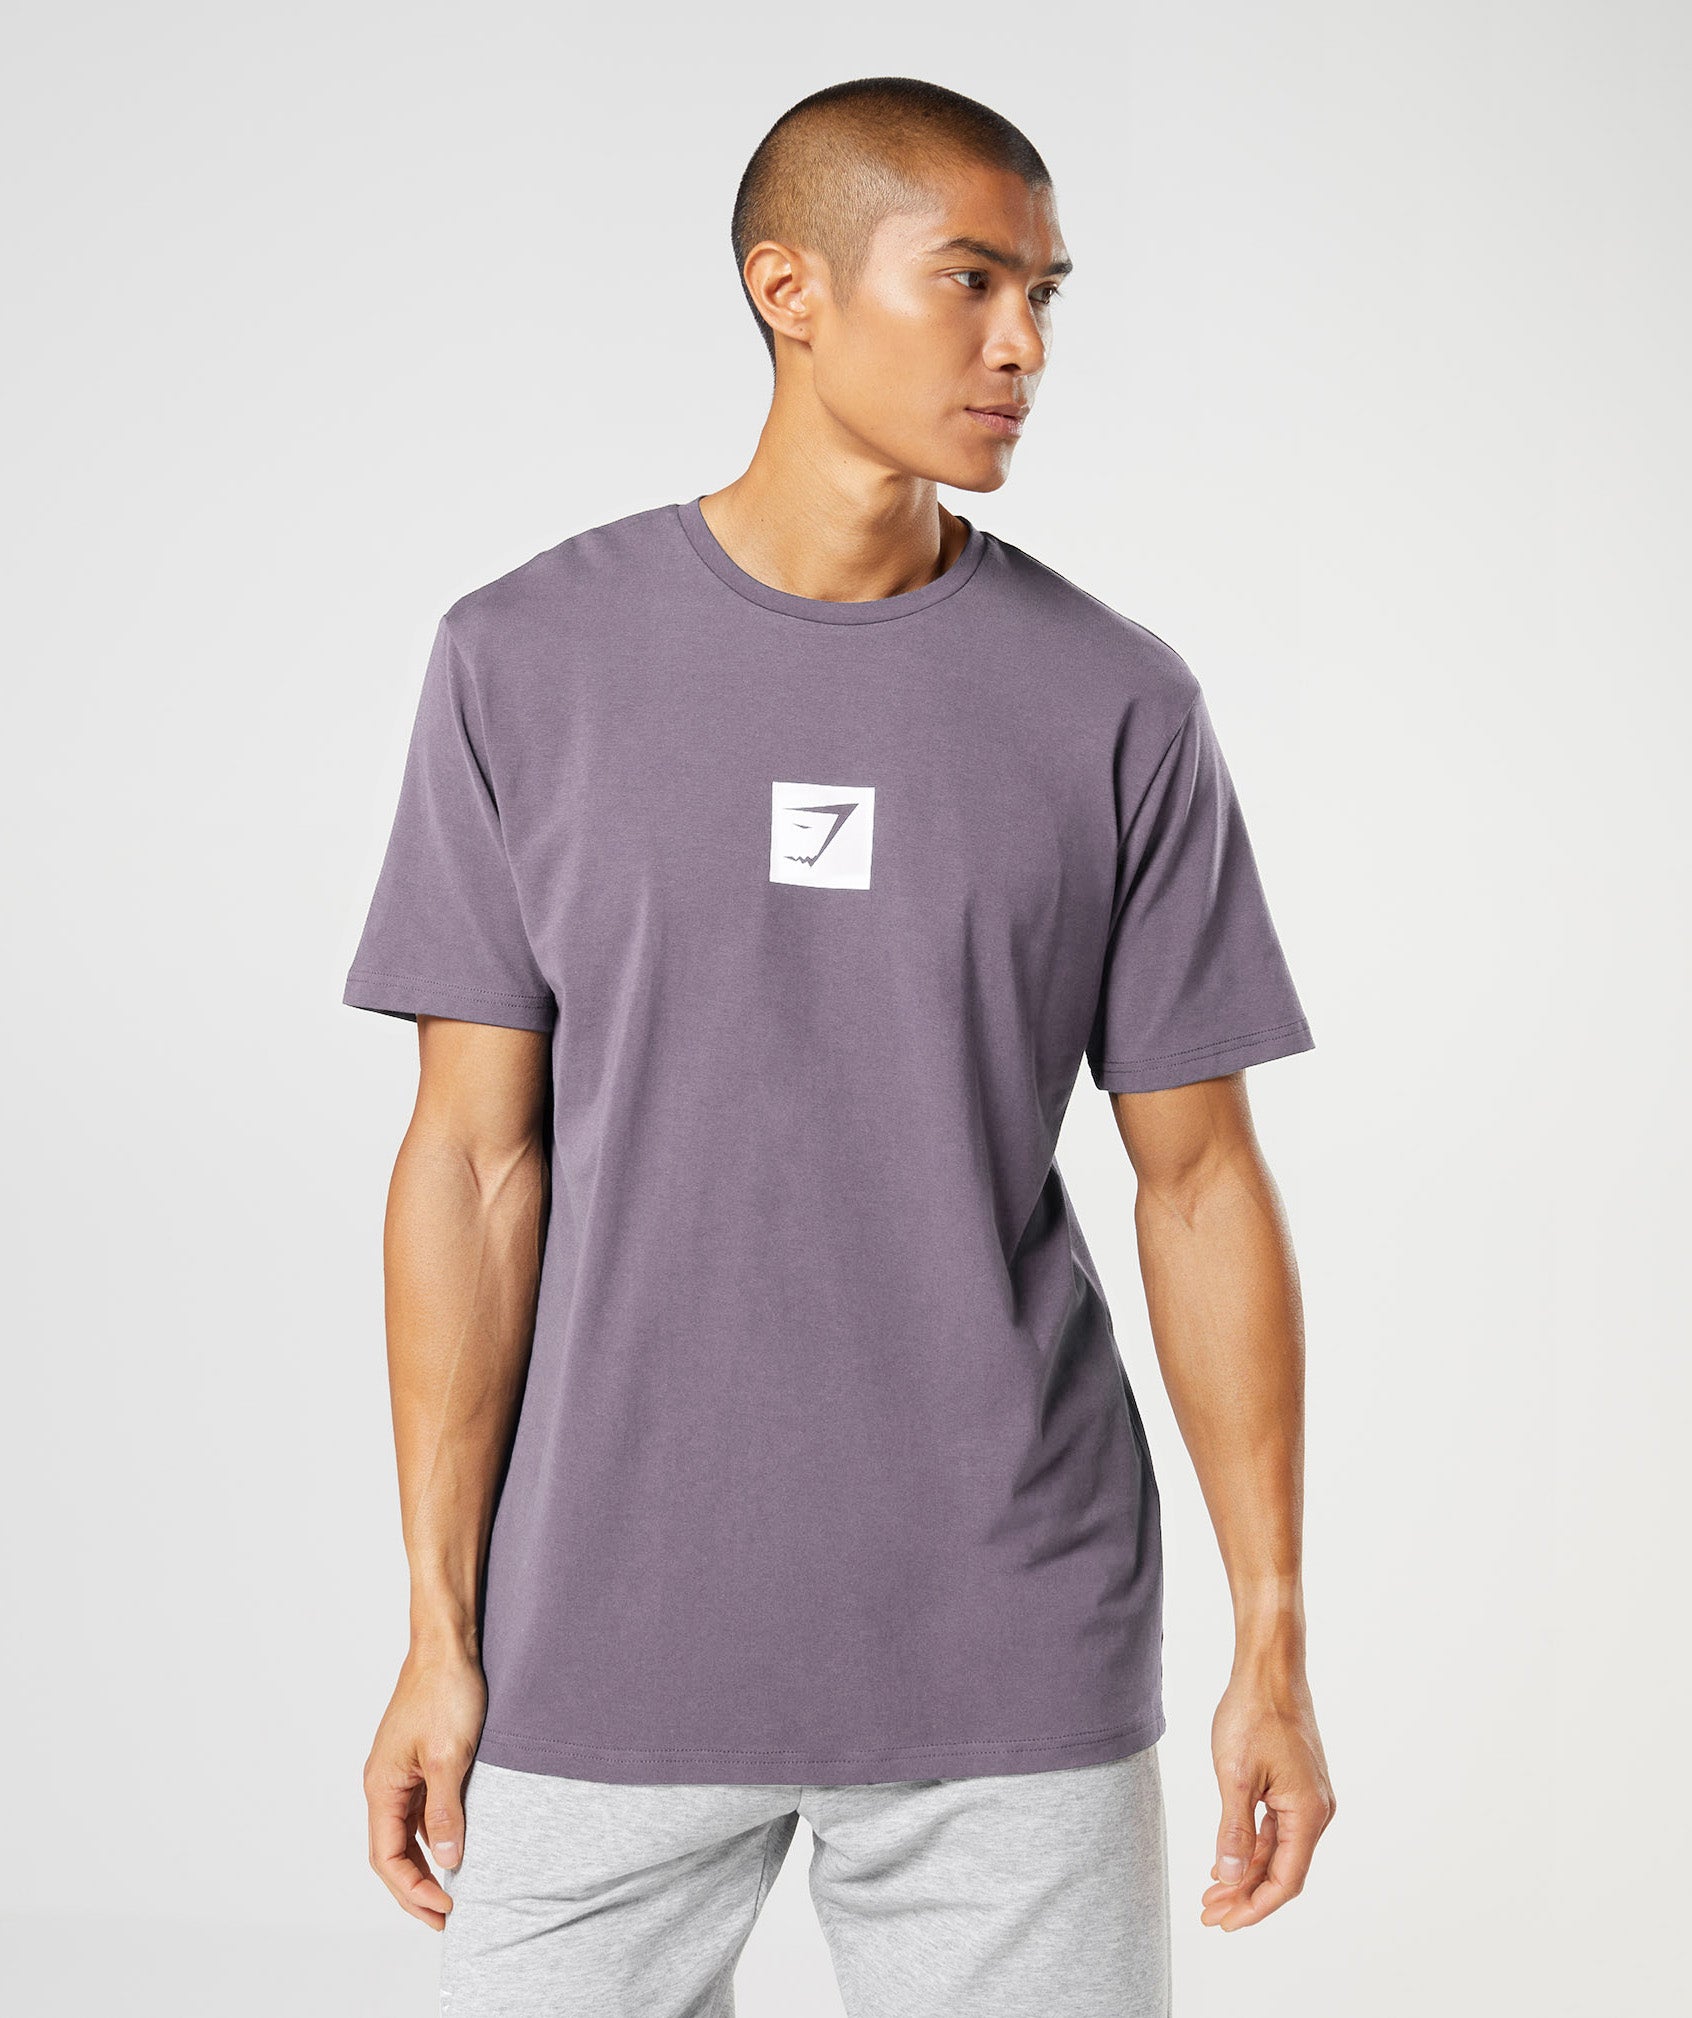 Gymshark Outline T-Shirt - Musk Lilac